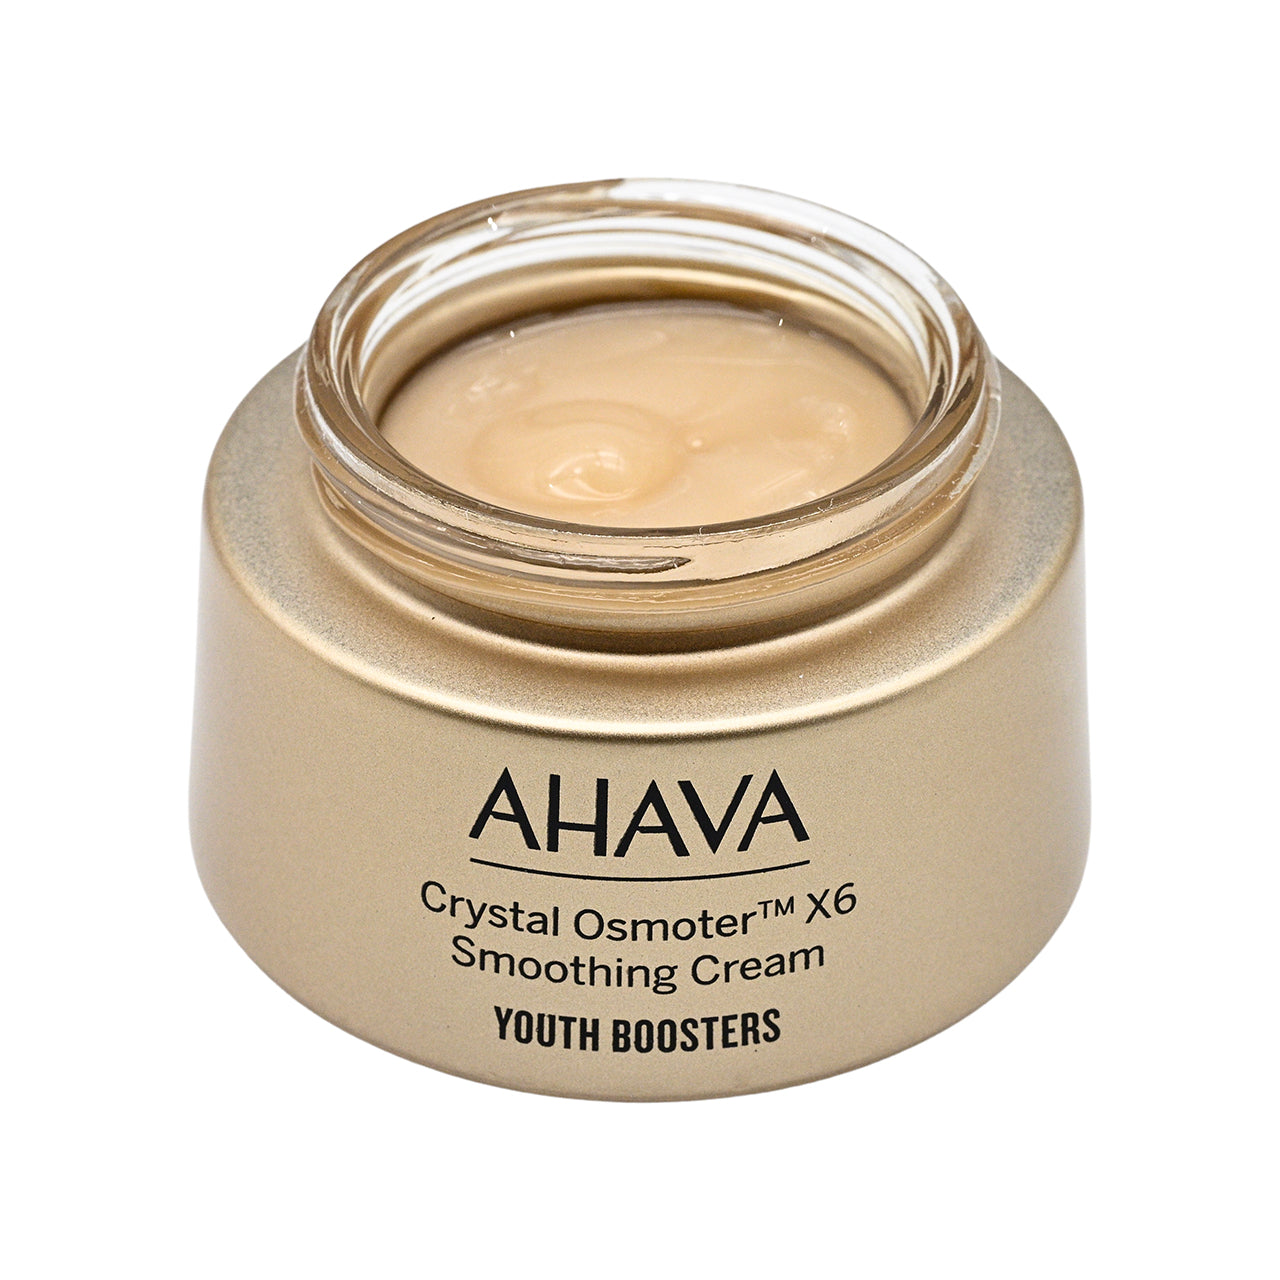 Ahava Crystal Osmoter X6 Smoothing Cream 50ml | Sasa Global eShop